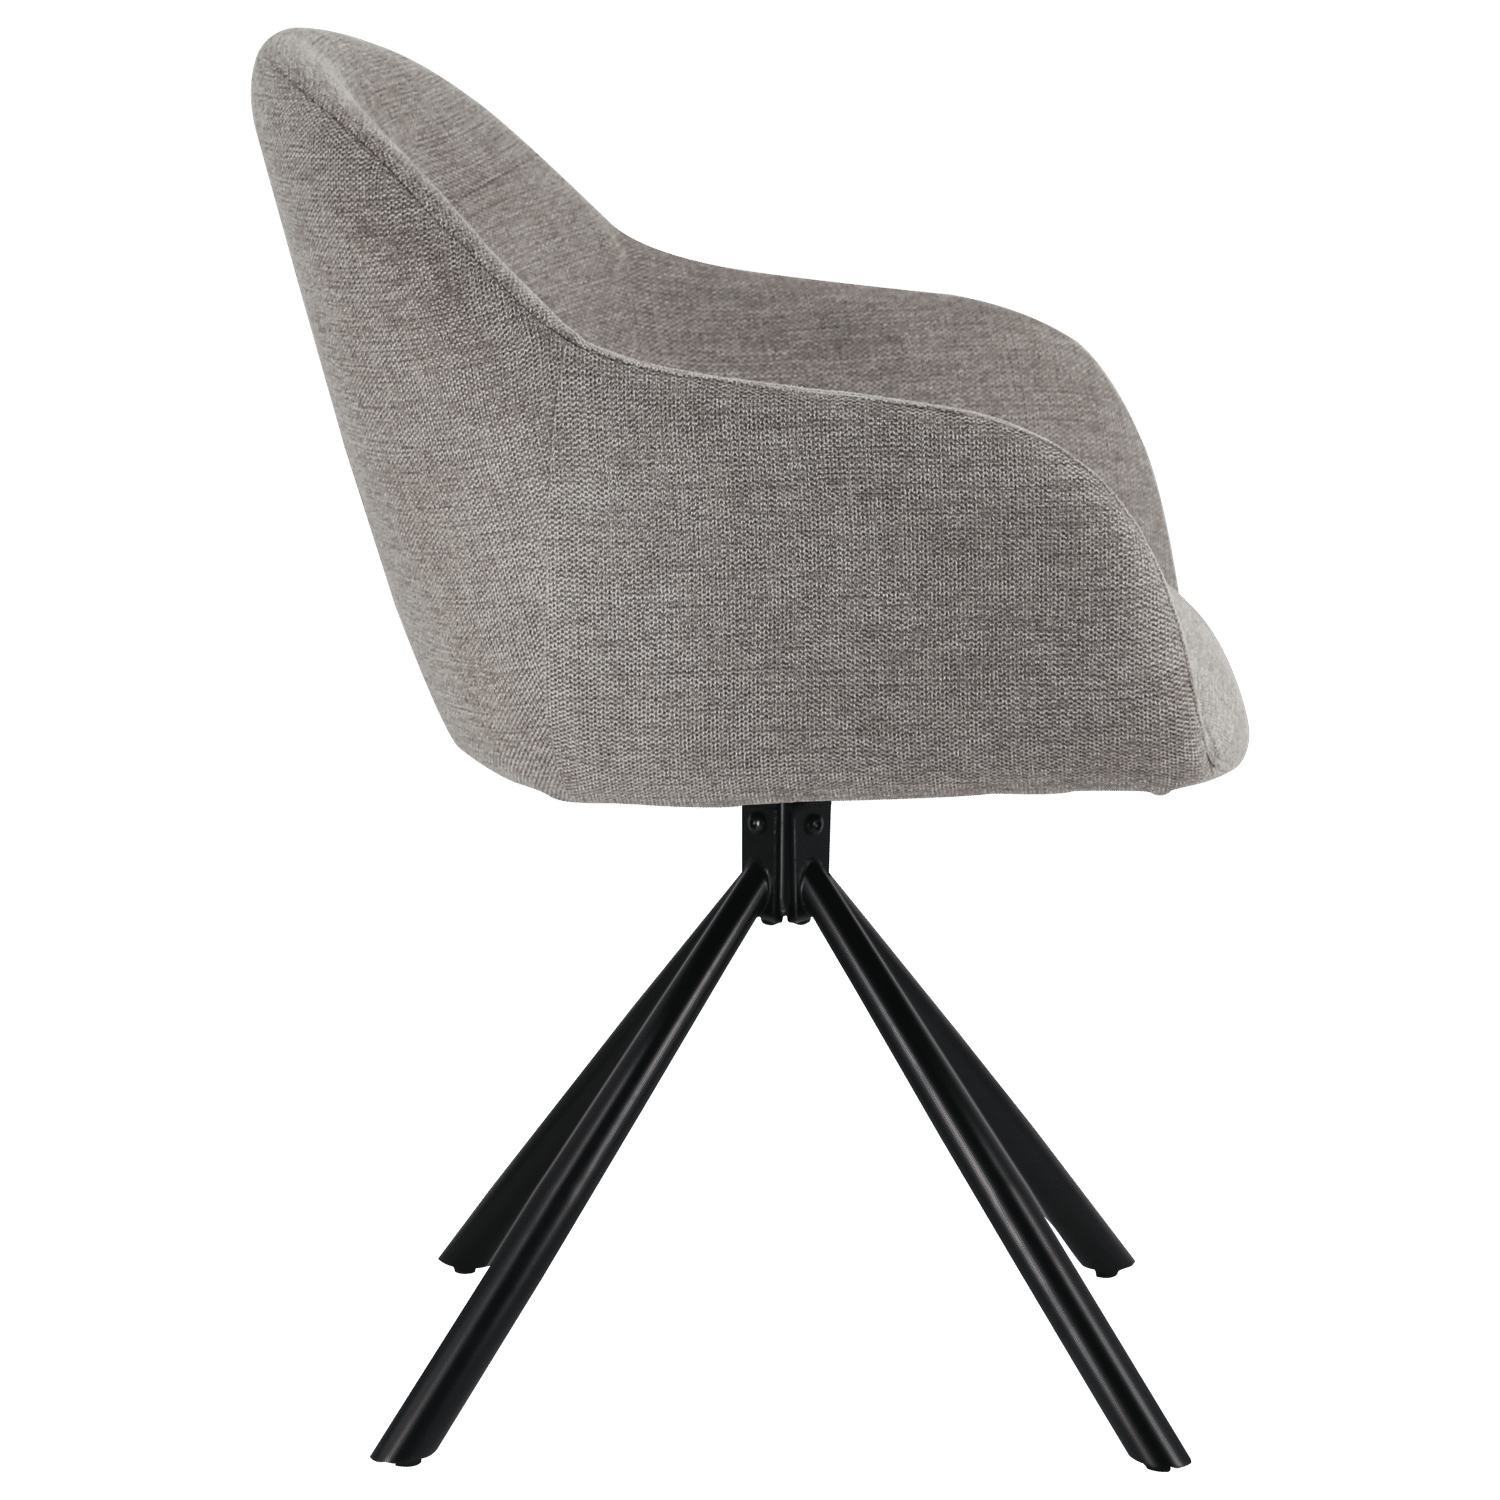 Set van 2 SAFFI grijze stoffen stoelen